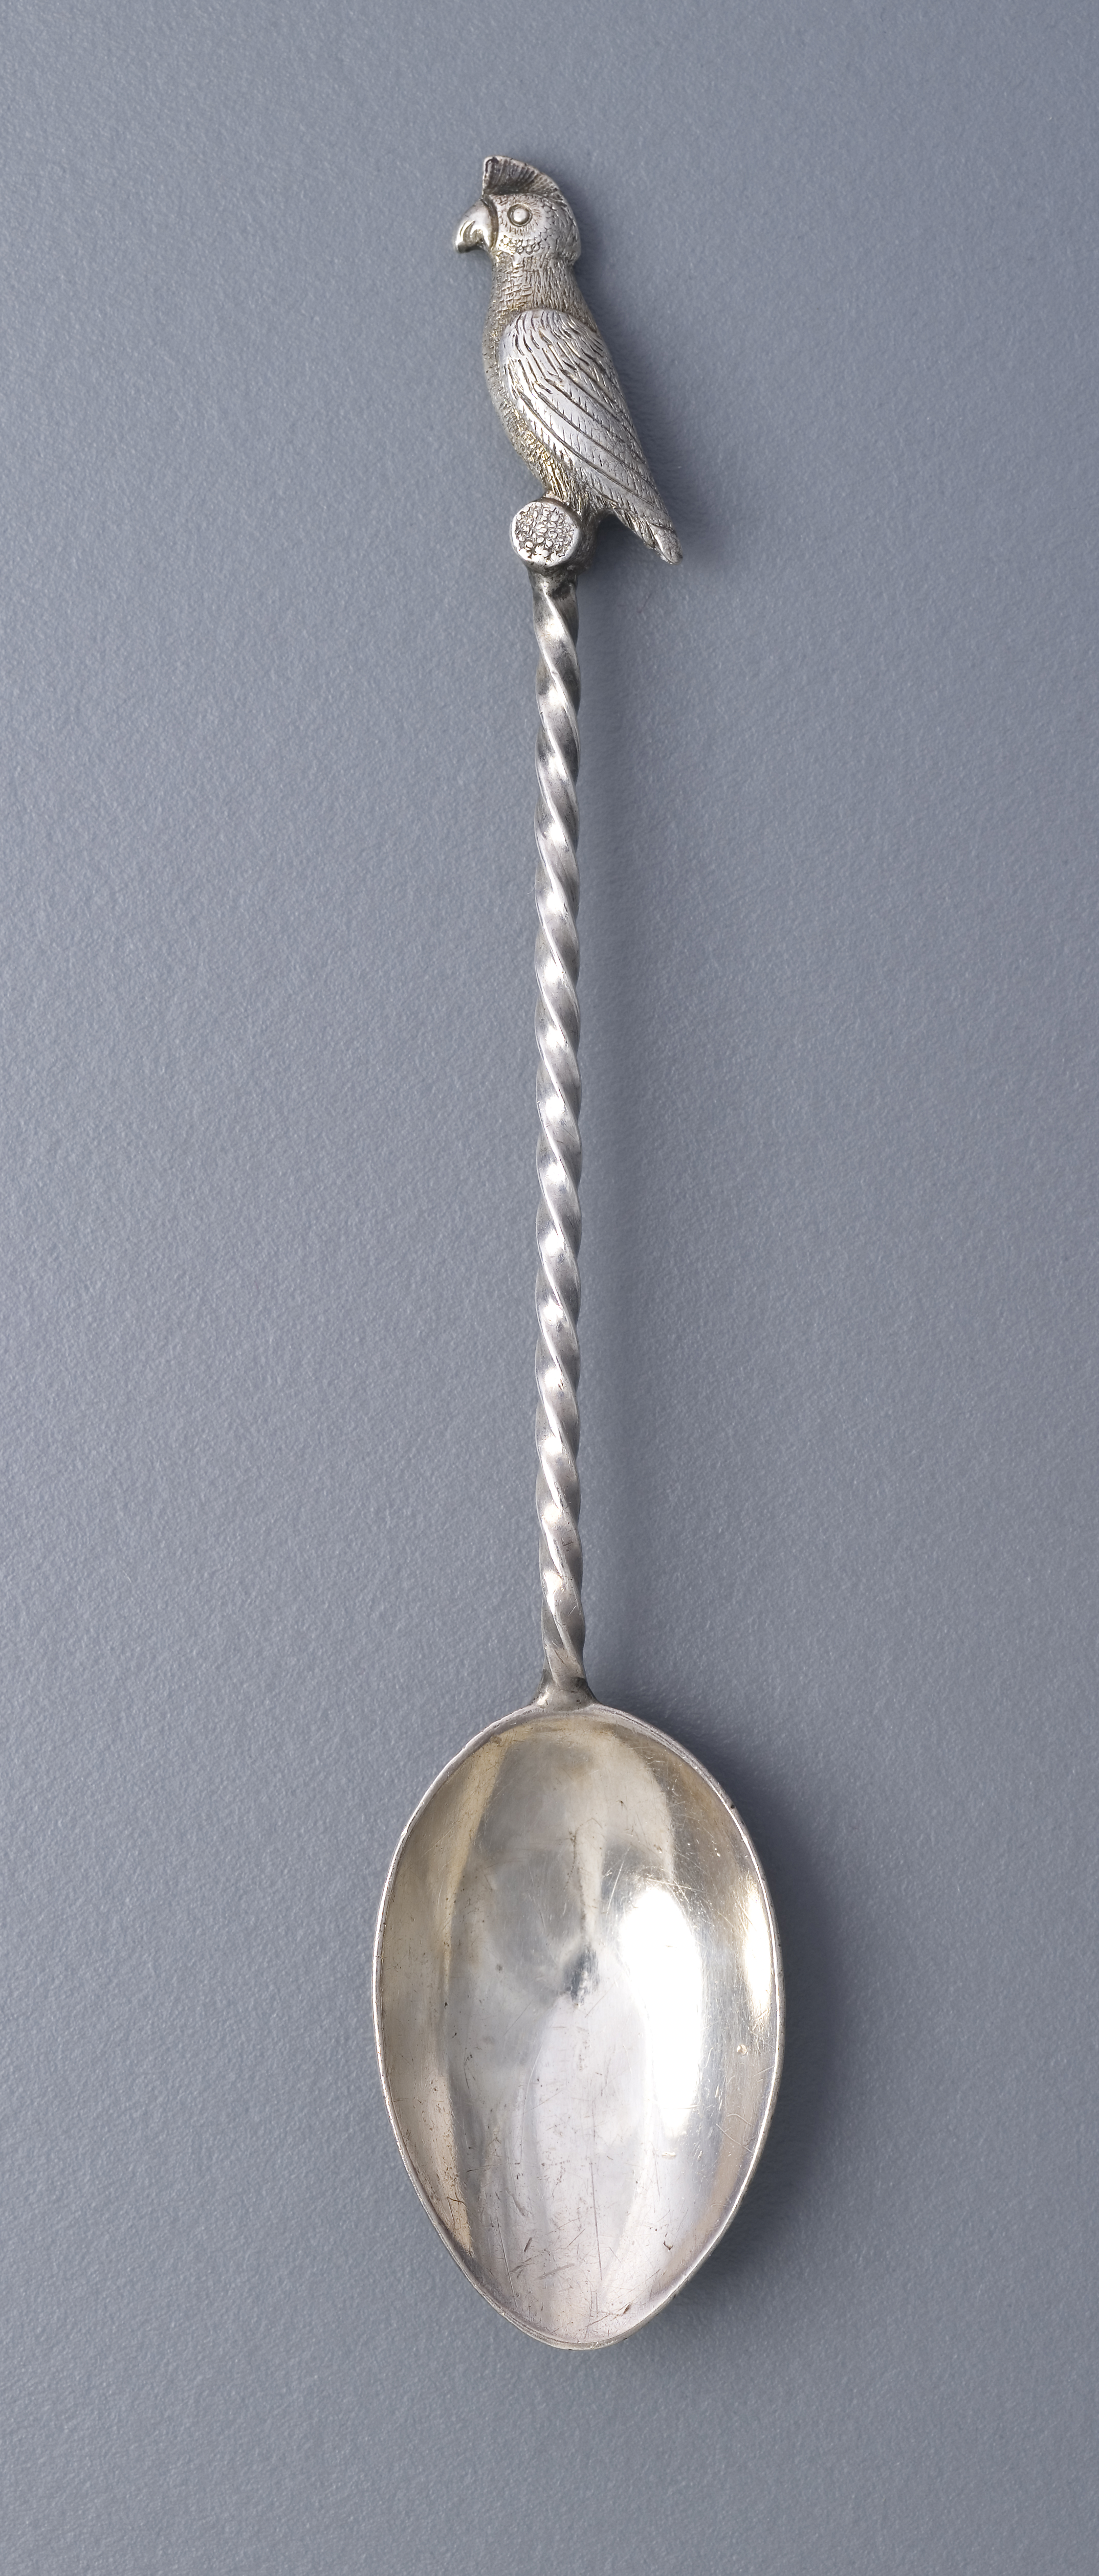 Souvenir spoon with cockatoo finial